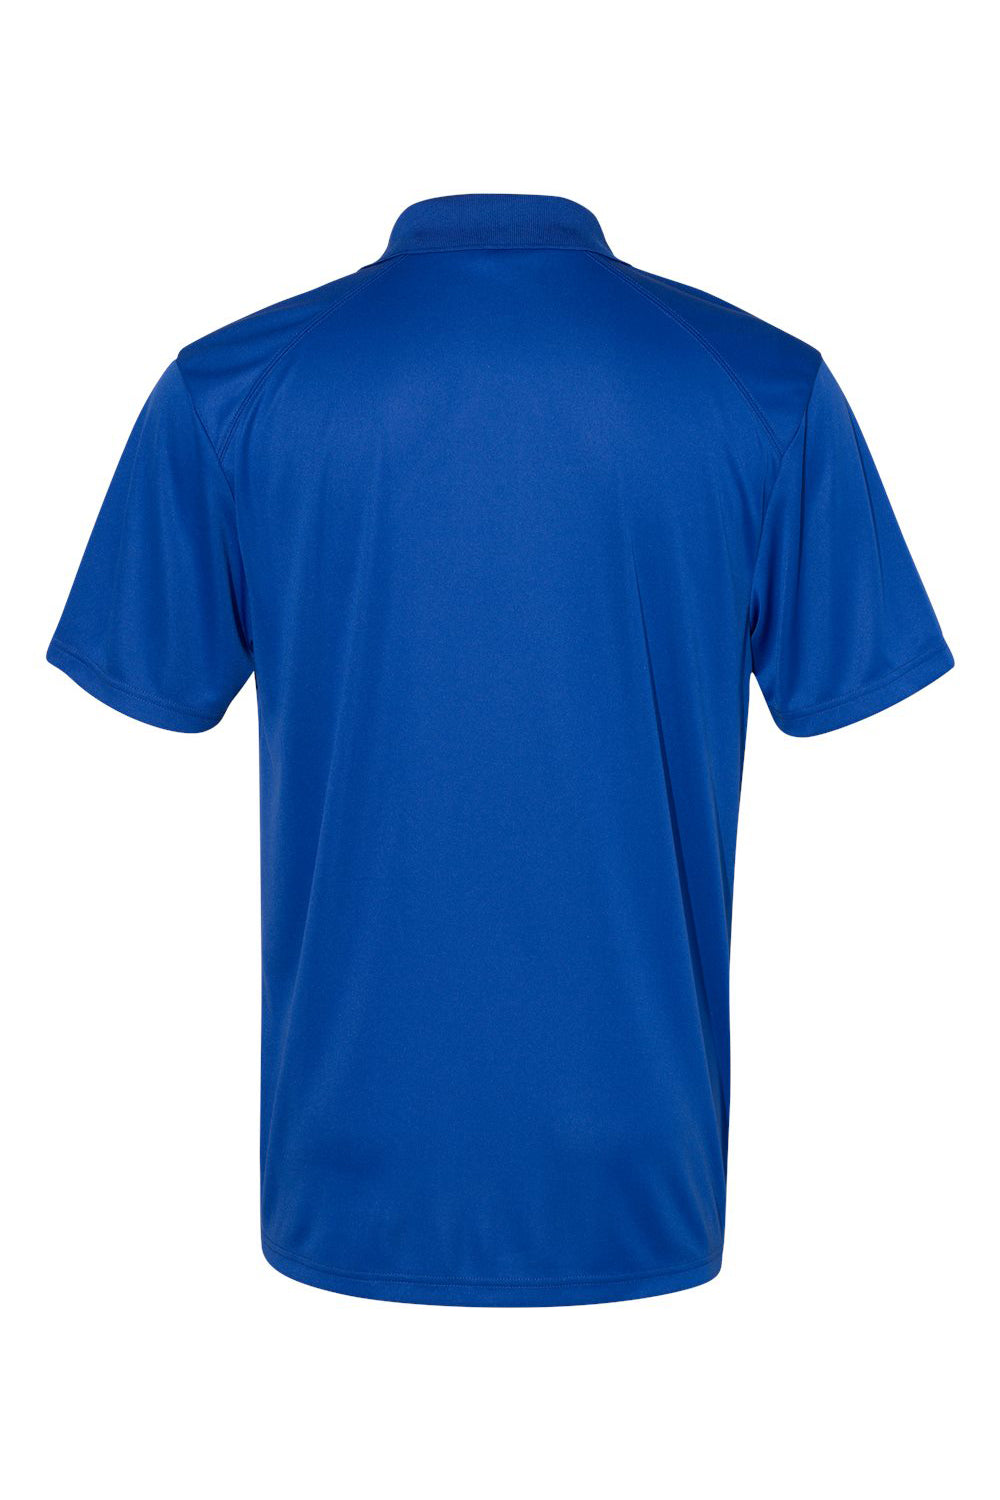 C2 Sport 5900 Mens Utility Moisture Wicking Short Sleeve Polo Shirt Royal Blue Flat Back